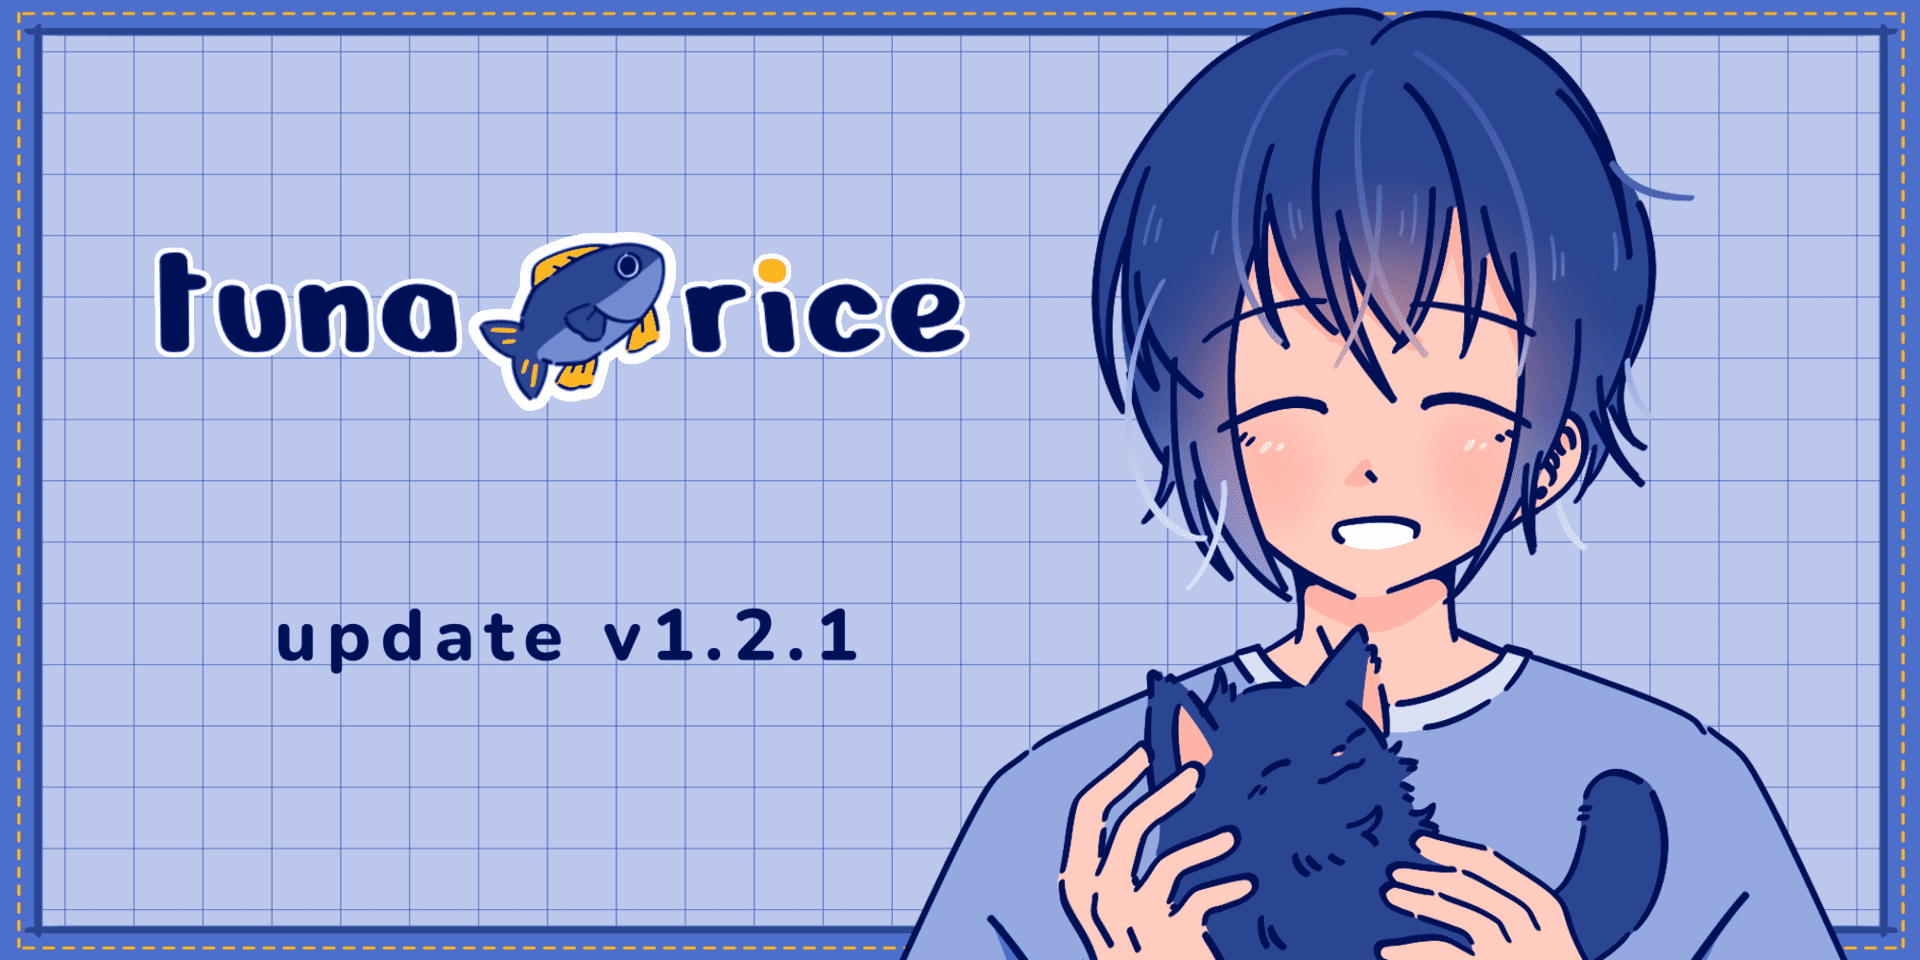 Update v1.2.1 - small bug fix + new translation added! / Tuna Rice